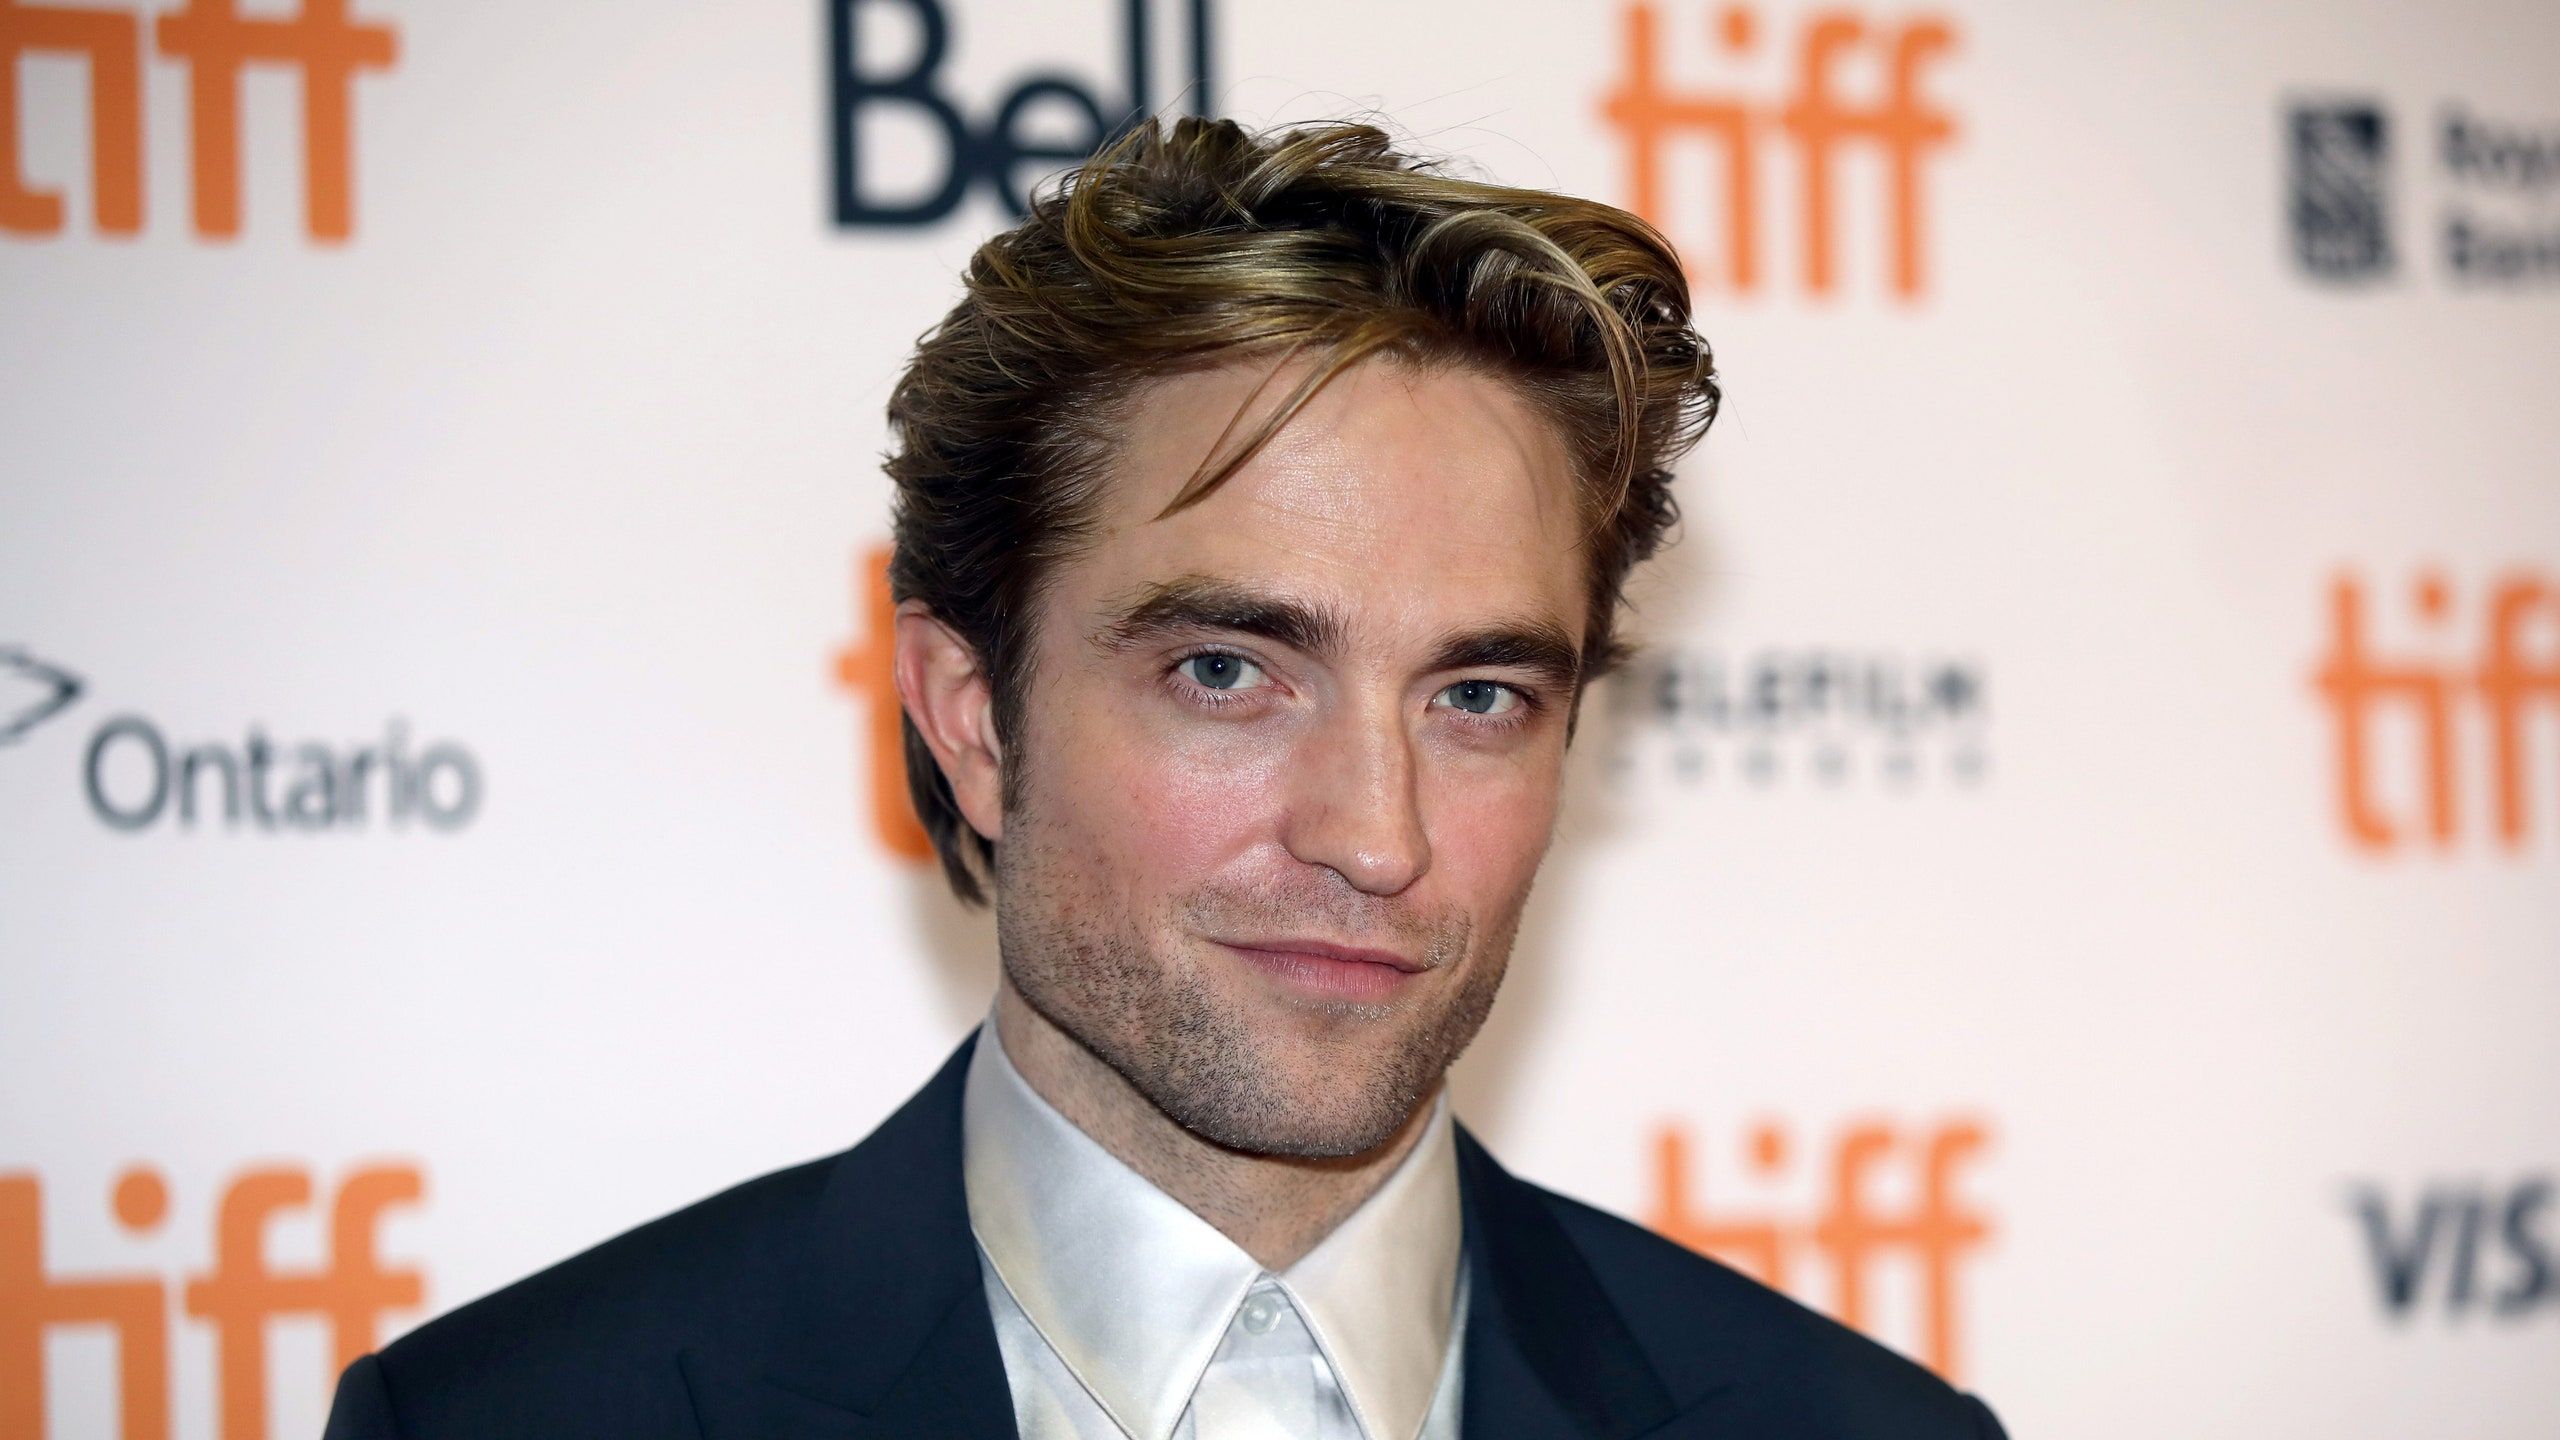 Robert Pattinson Thought the Response to Twilight Was Strange